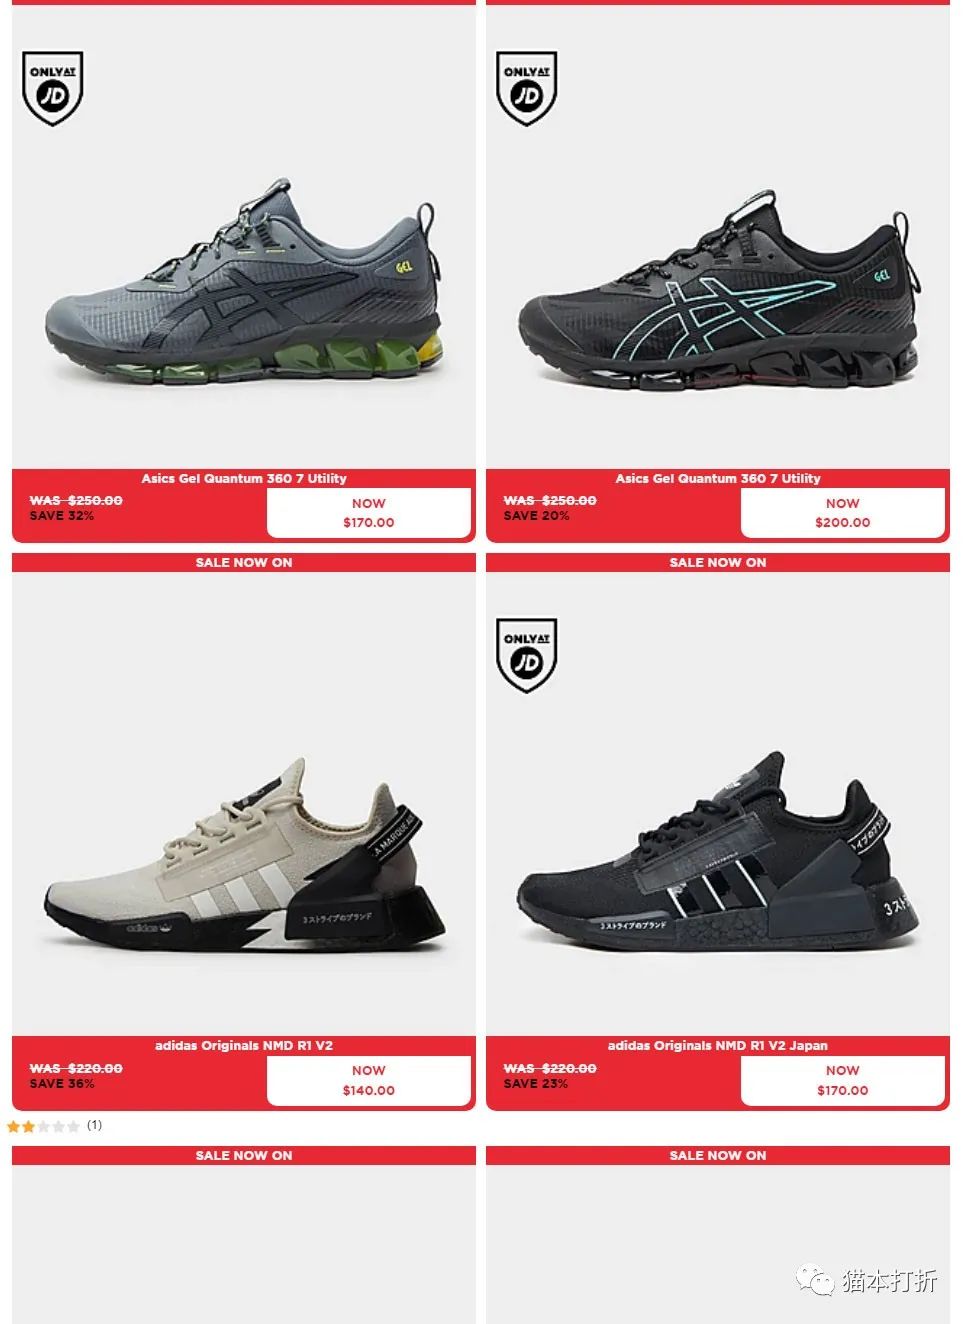 Nike, adidas等品牌的运动鞋、运动装最高50%折扣！@ JD Sports